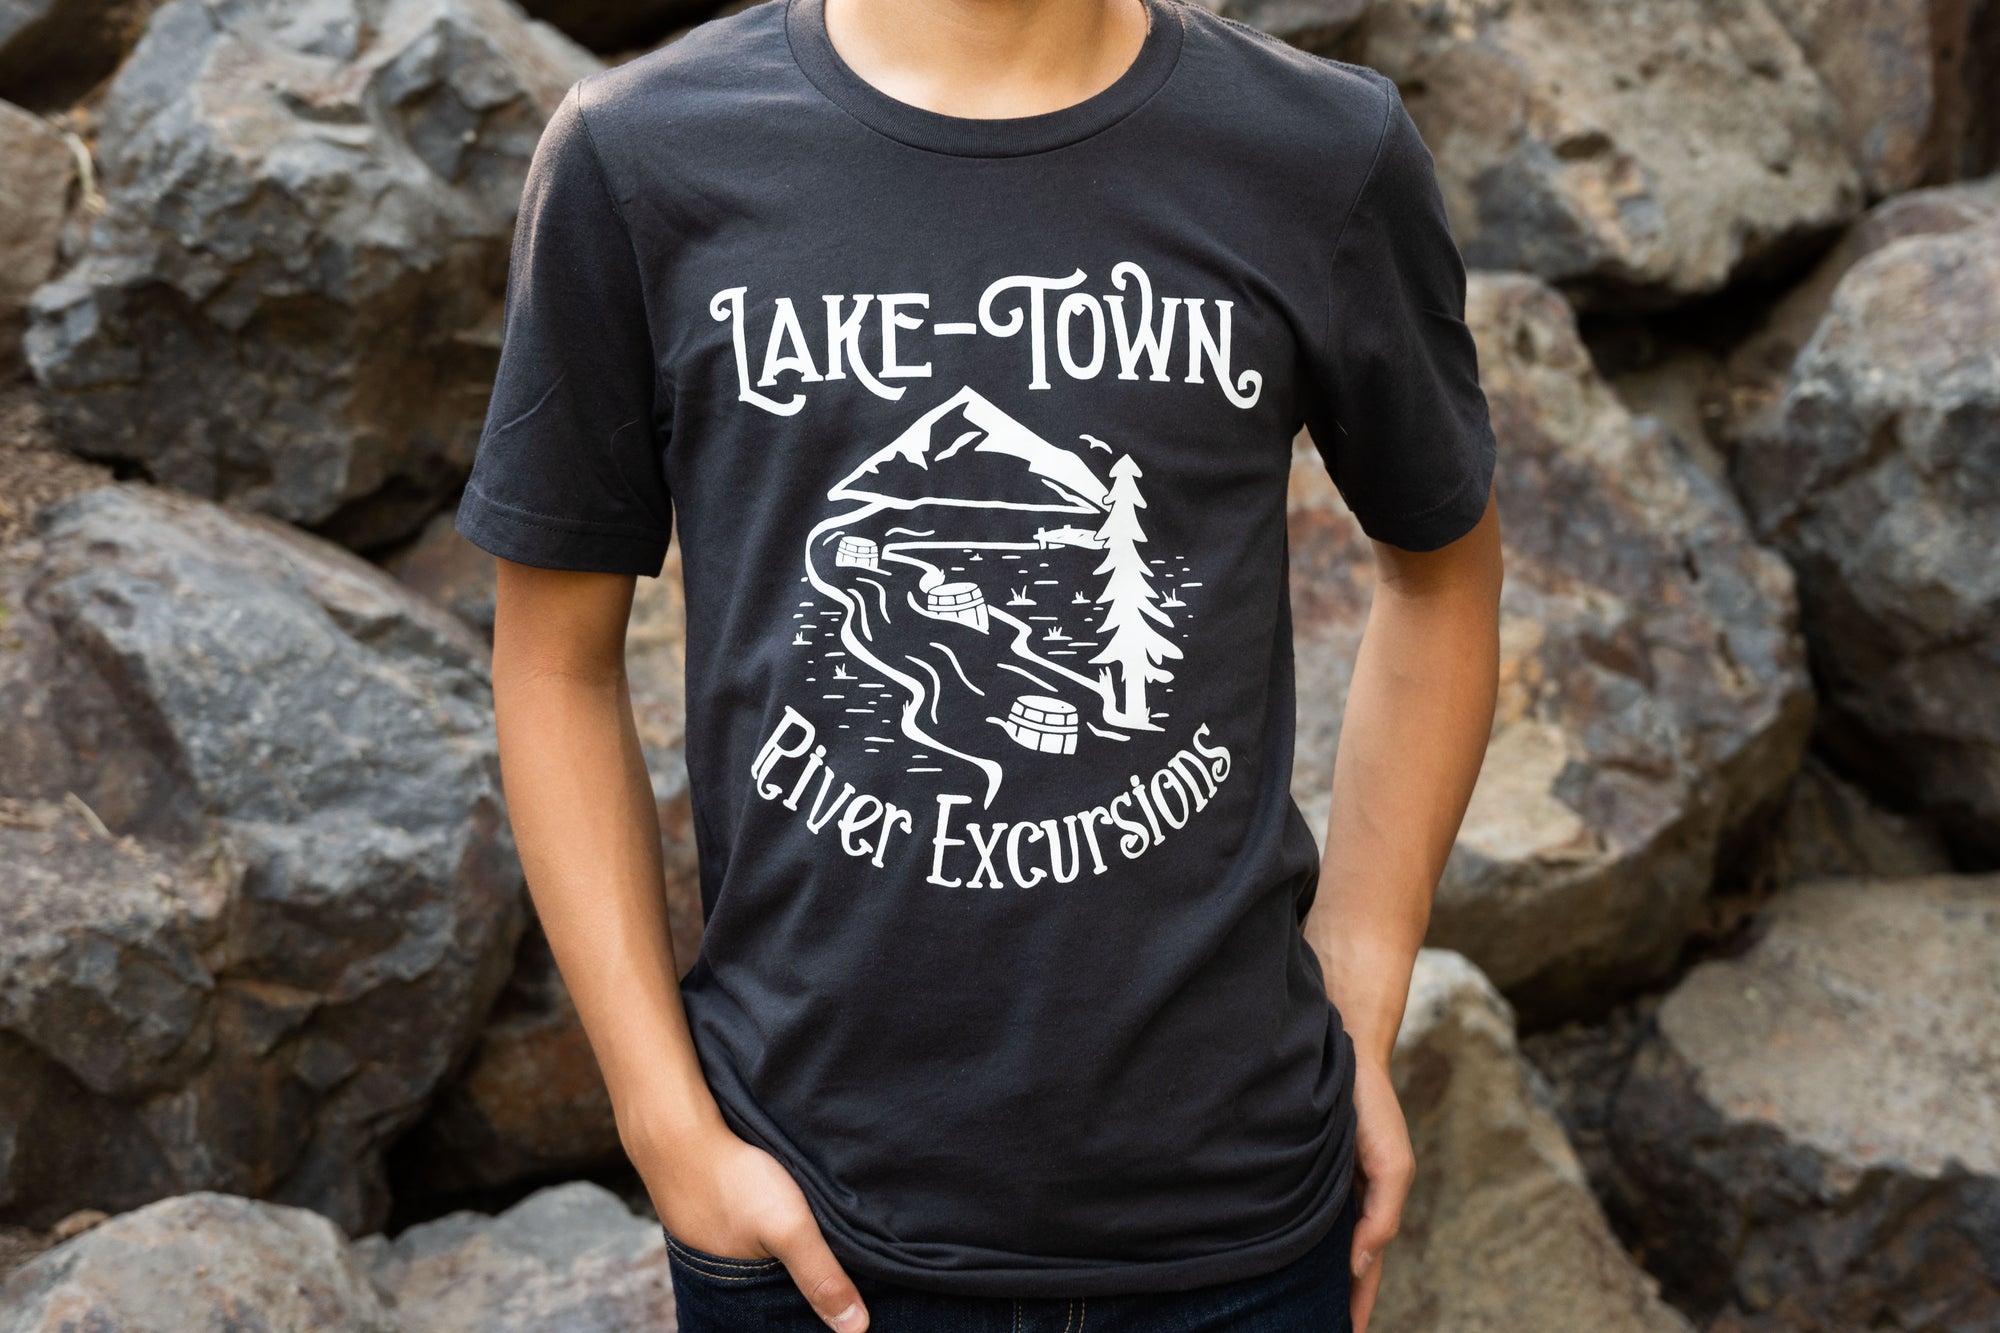 Lake-Town River Excursions T-Shirt (The Hobbit)